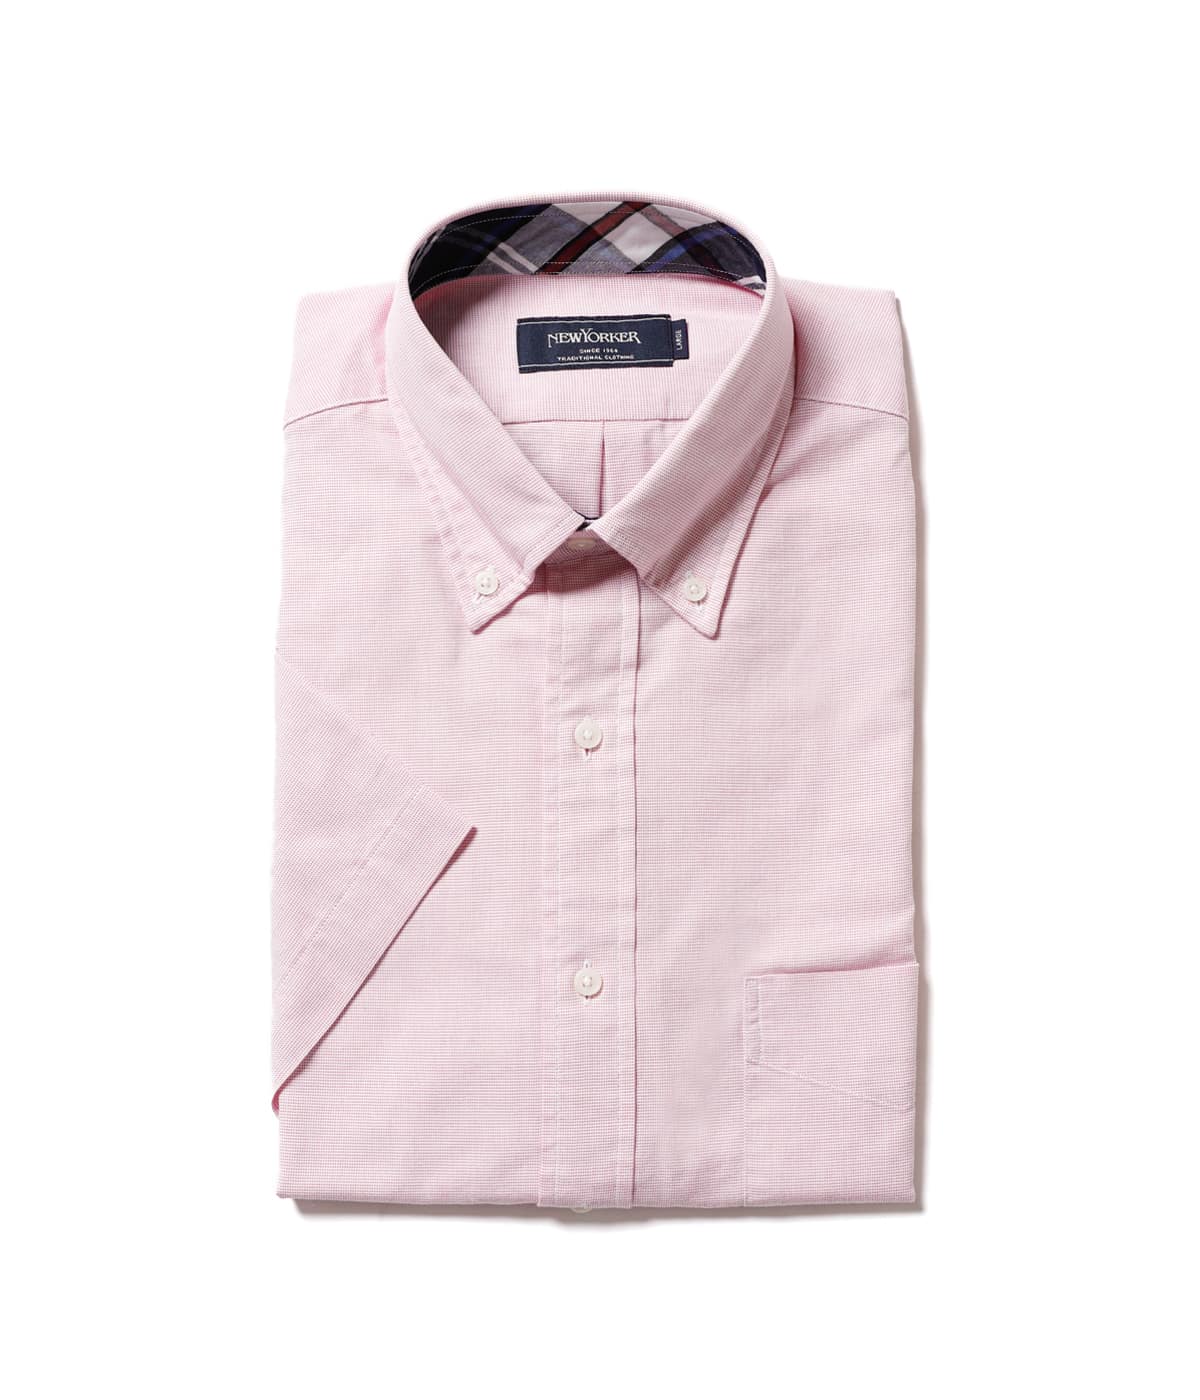 【COOL COMFORT(吸水速乾)】シャンブレーピンチェック 半袖ショートボタンダウンシャツ